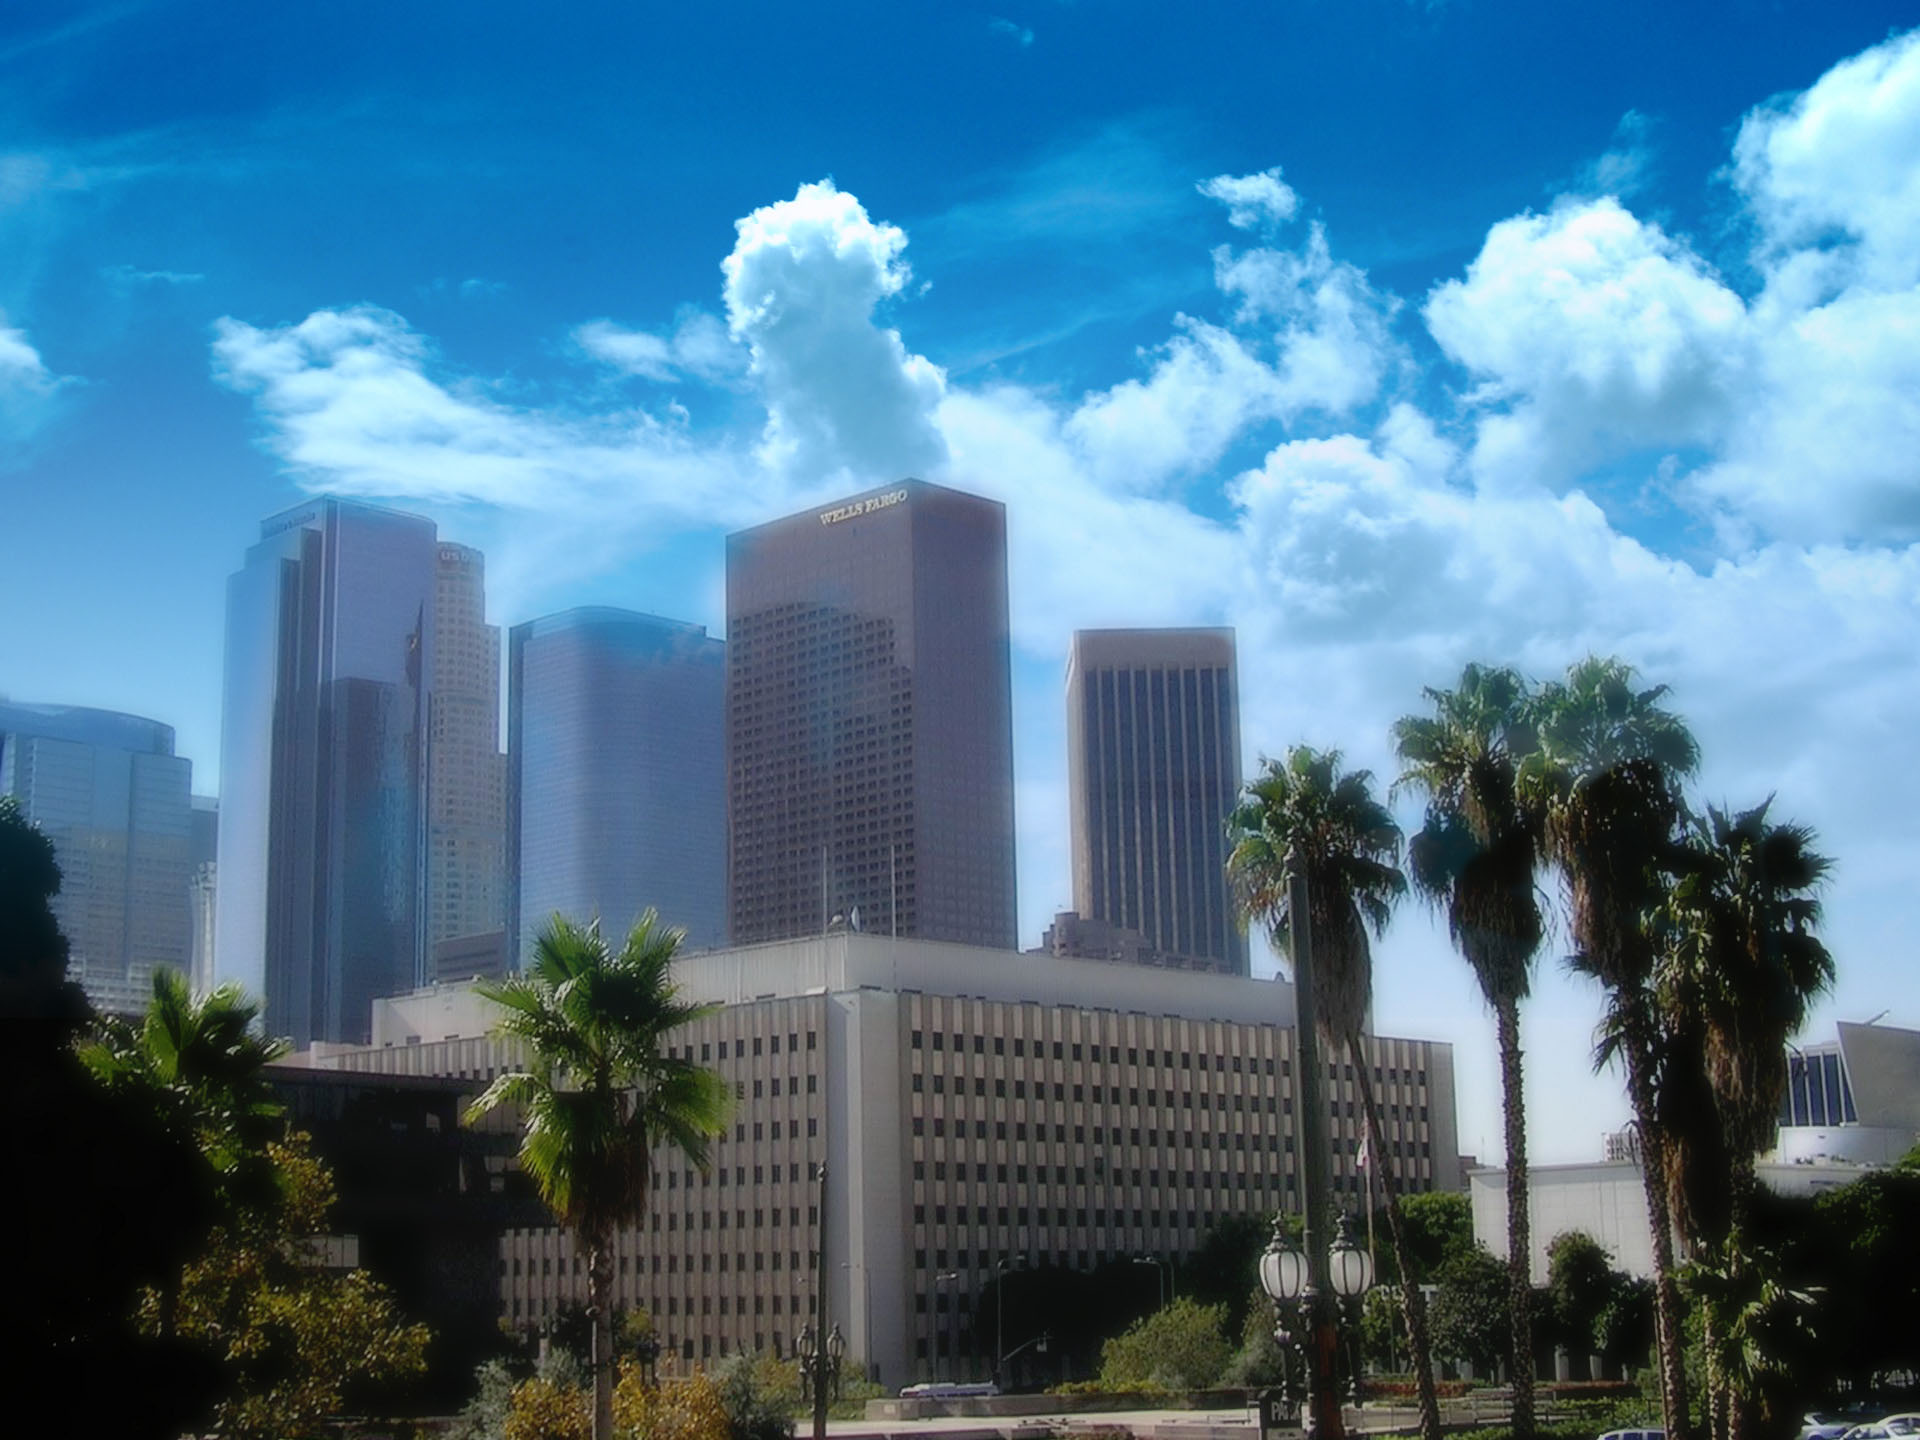 Los Angeles Desktop Wallpaper Wallpapers Hd Background City LA Image